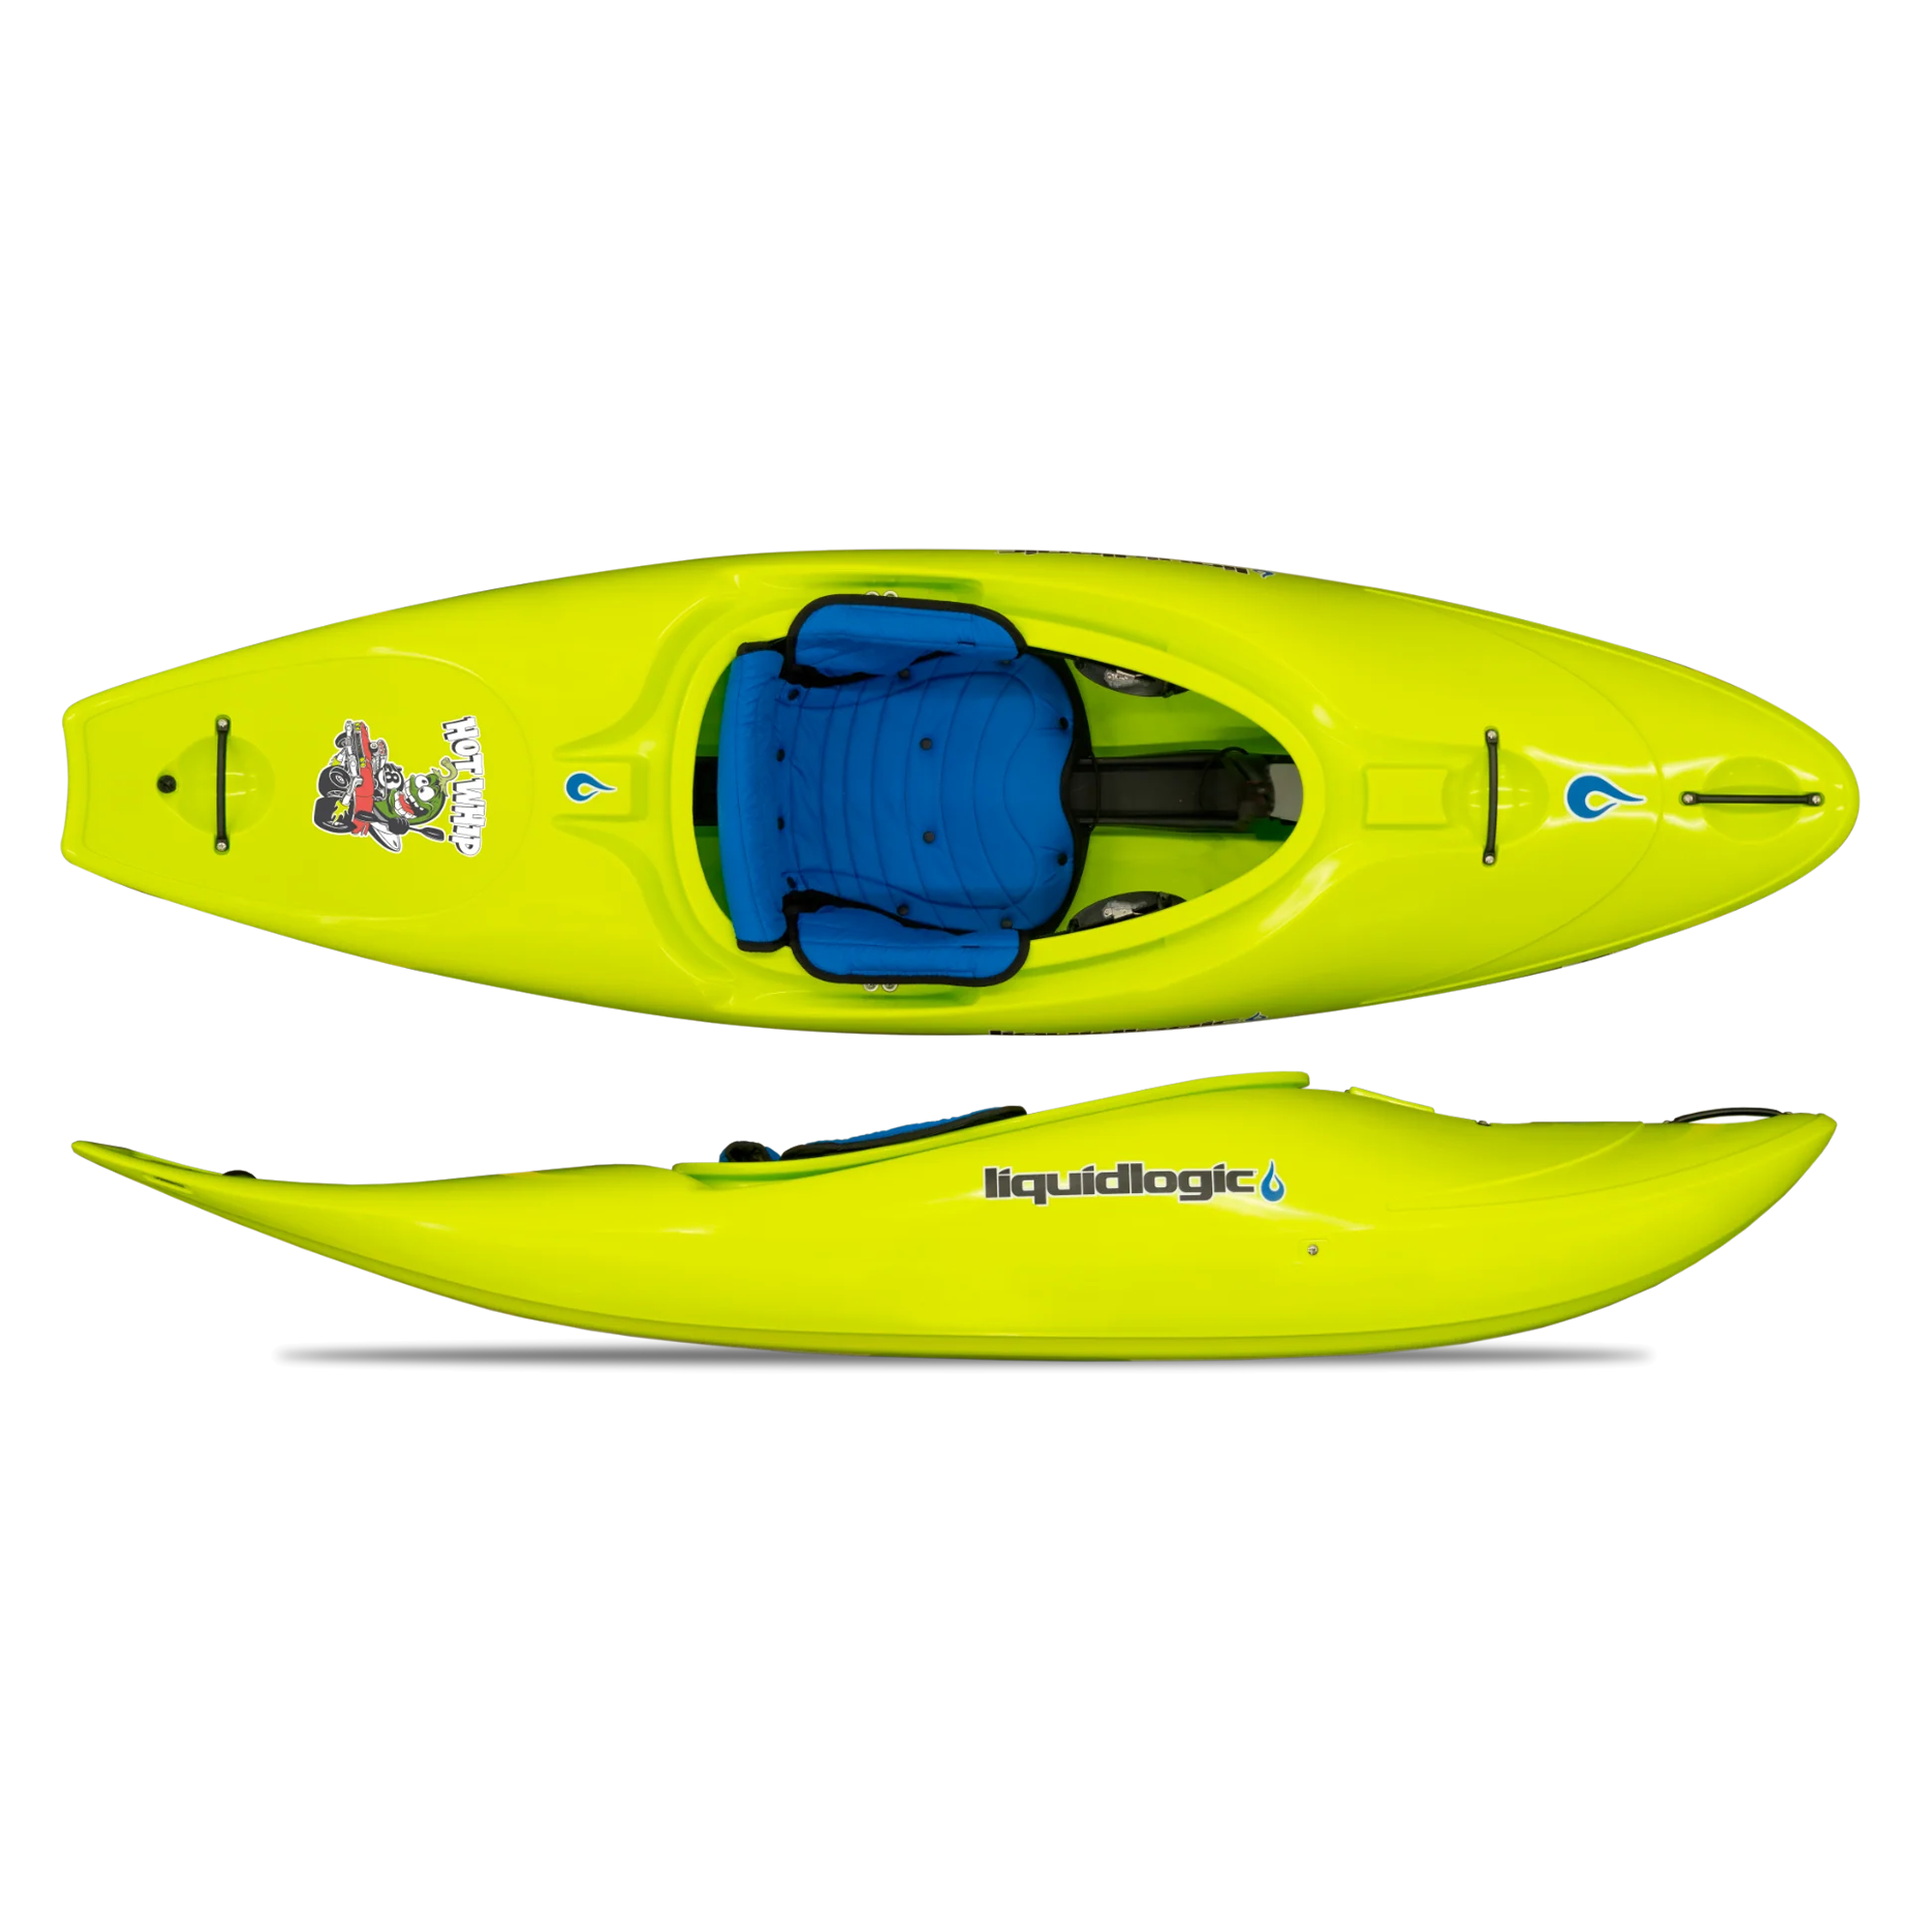 Beginners Guide to Whitewater Kayaking Gear - Kokatat